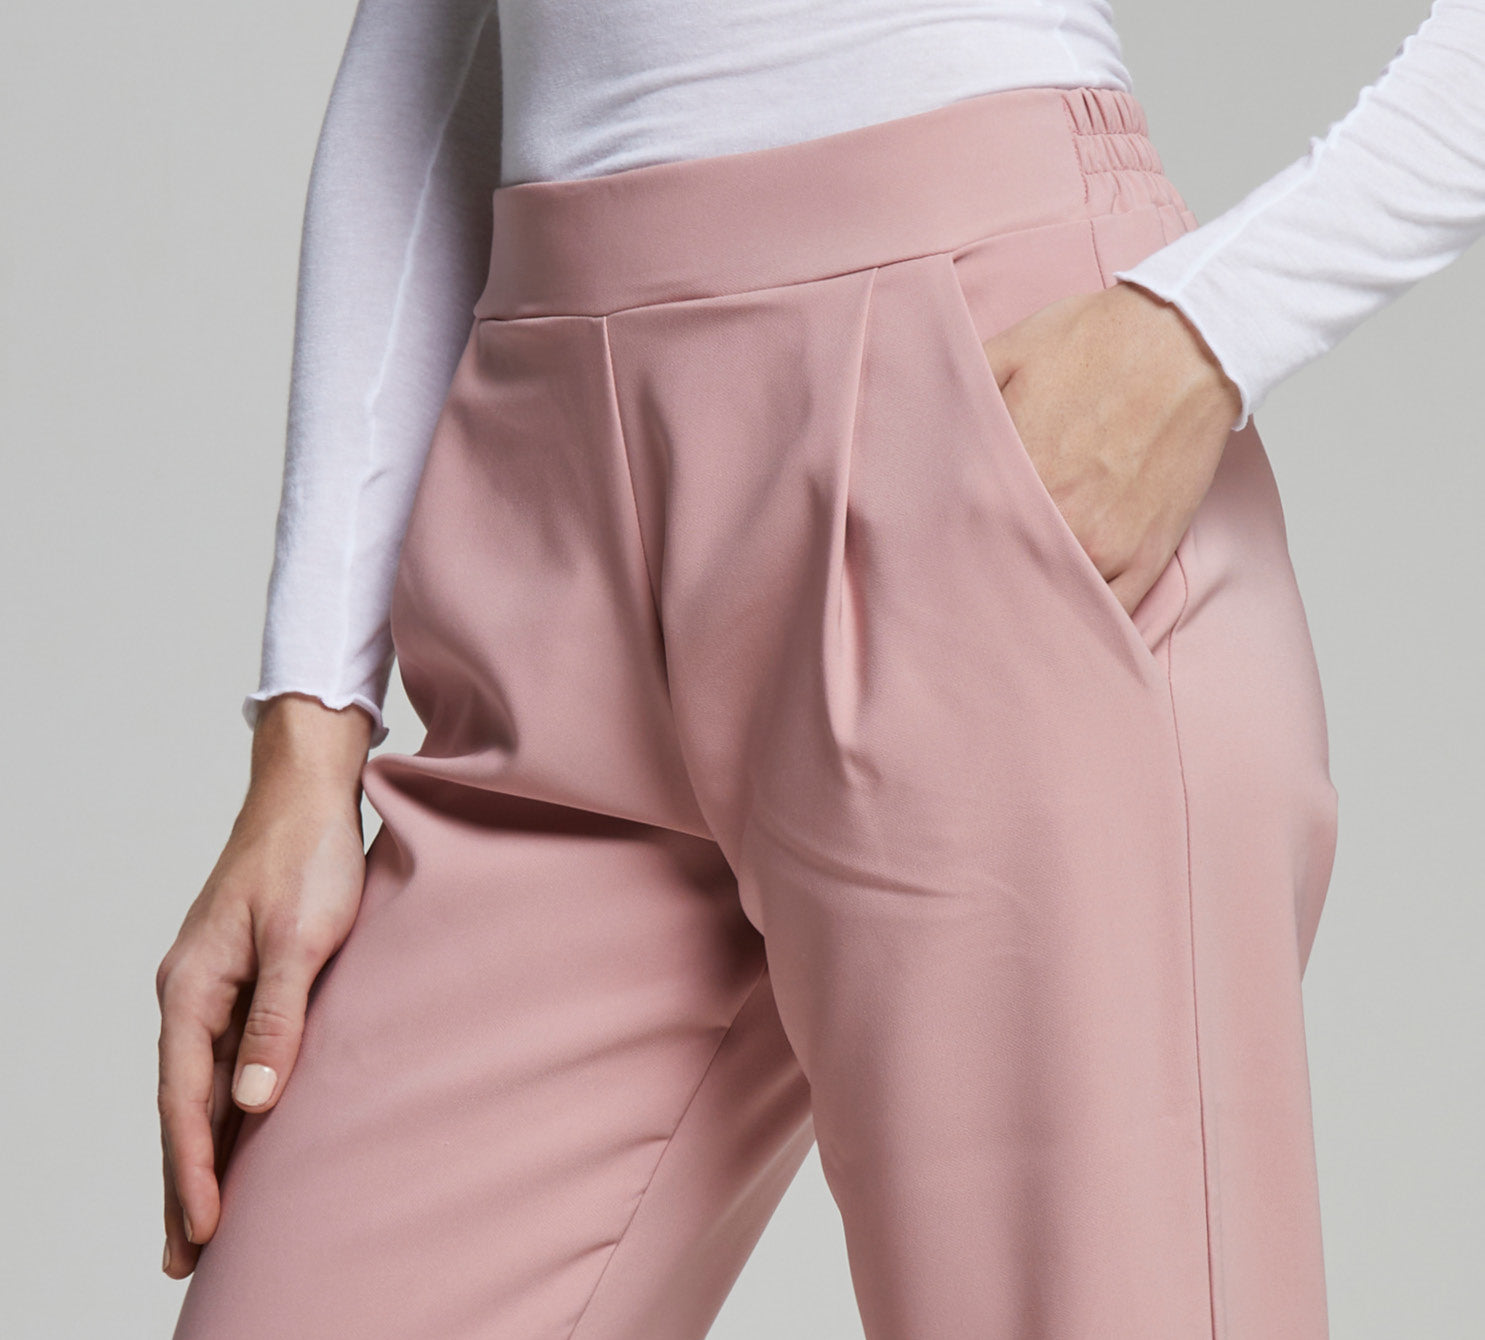 Sara women’s classic model trousers